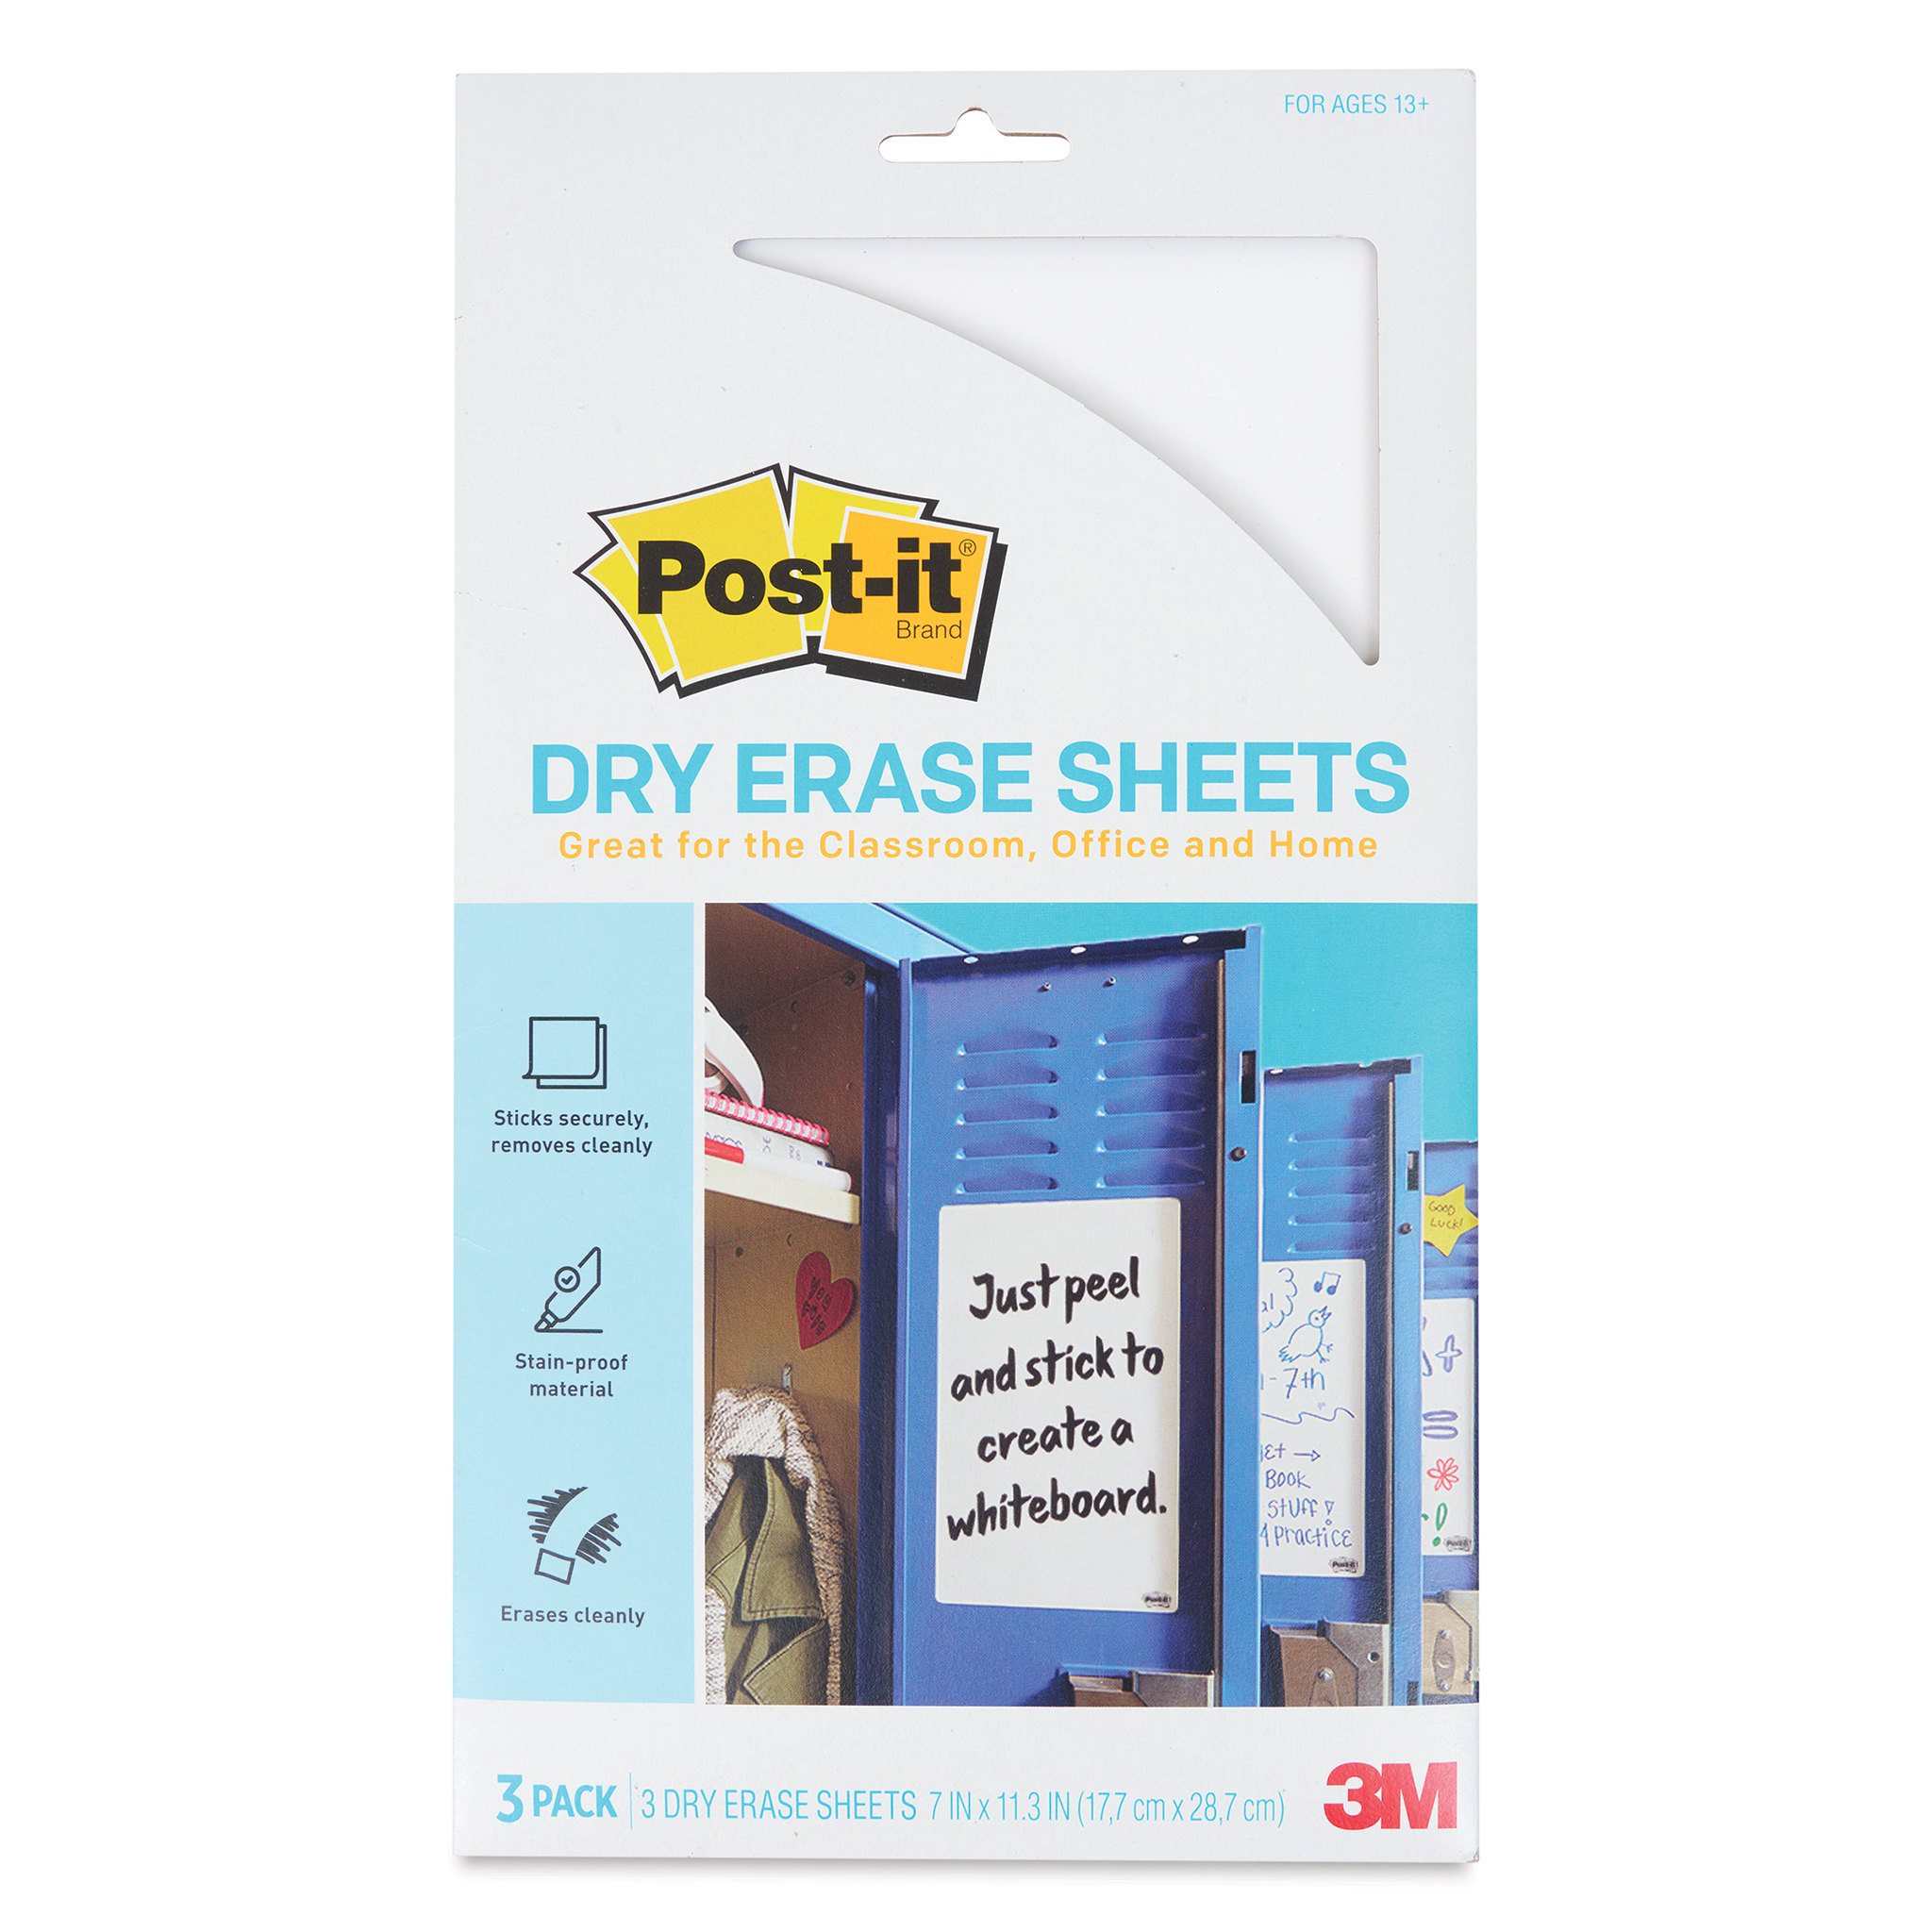 Postit Dry Erase Sheets